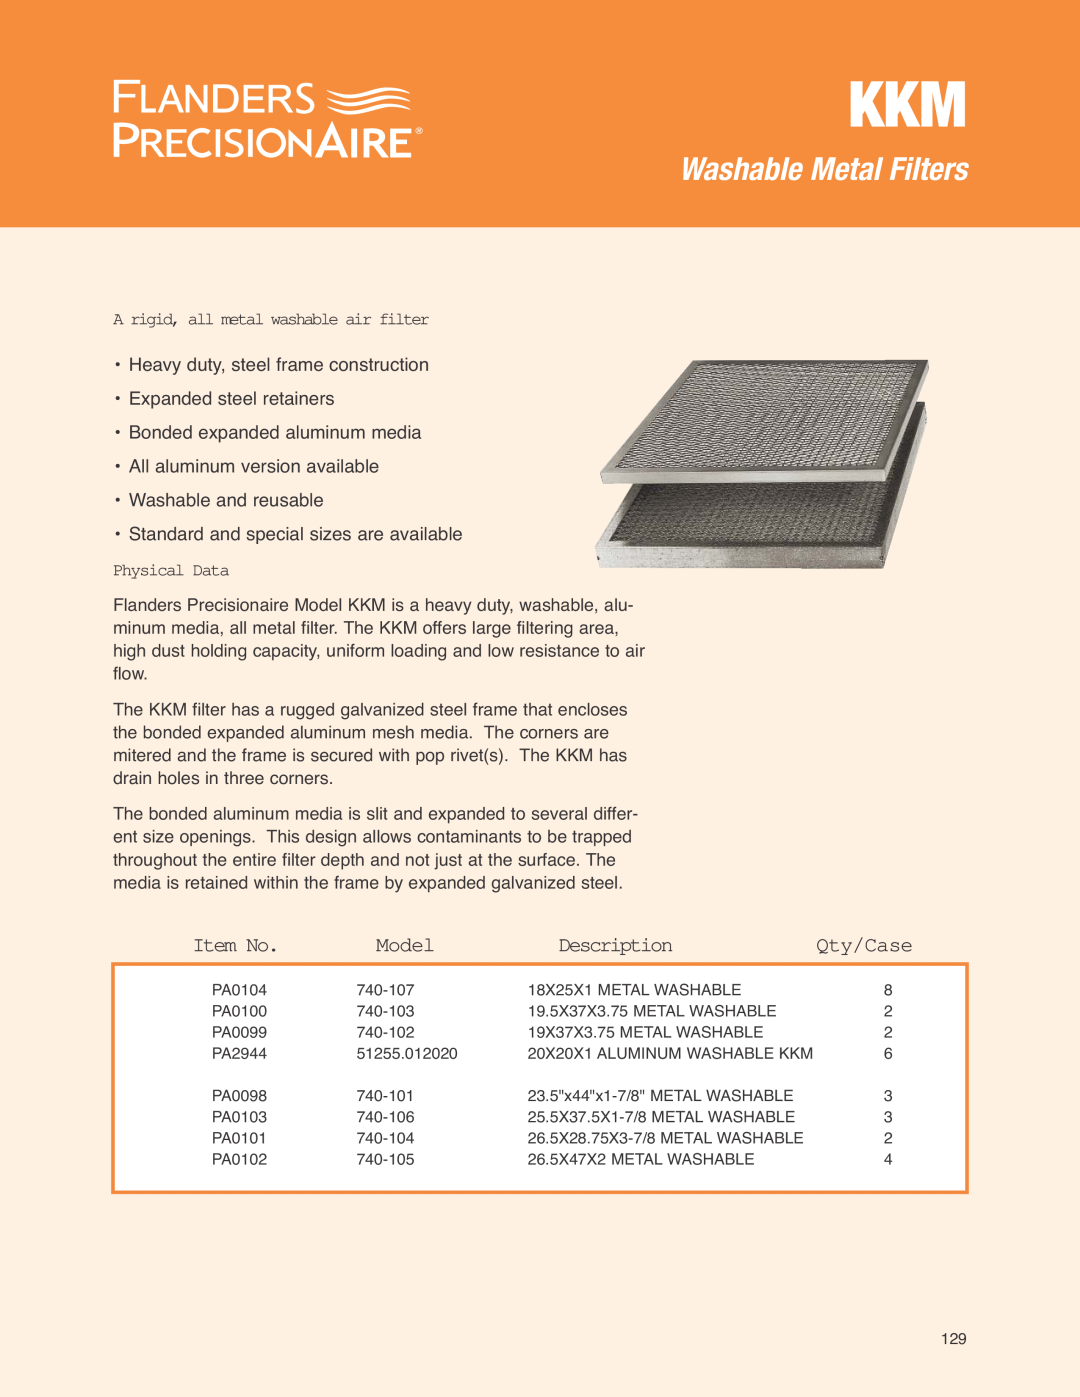 Precisionaire KKM manual Washable Metal Filters, Item No, Model, Description, Qty/Case, Expanded steel retainers 